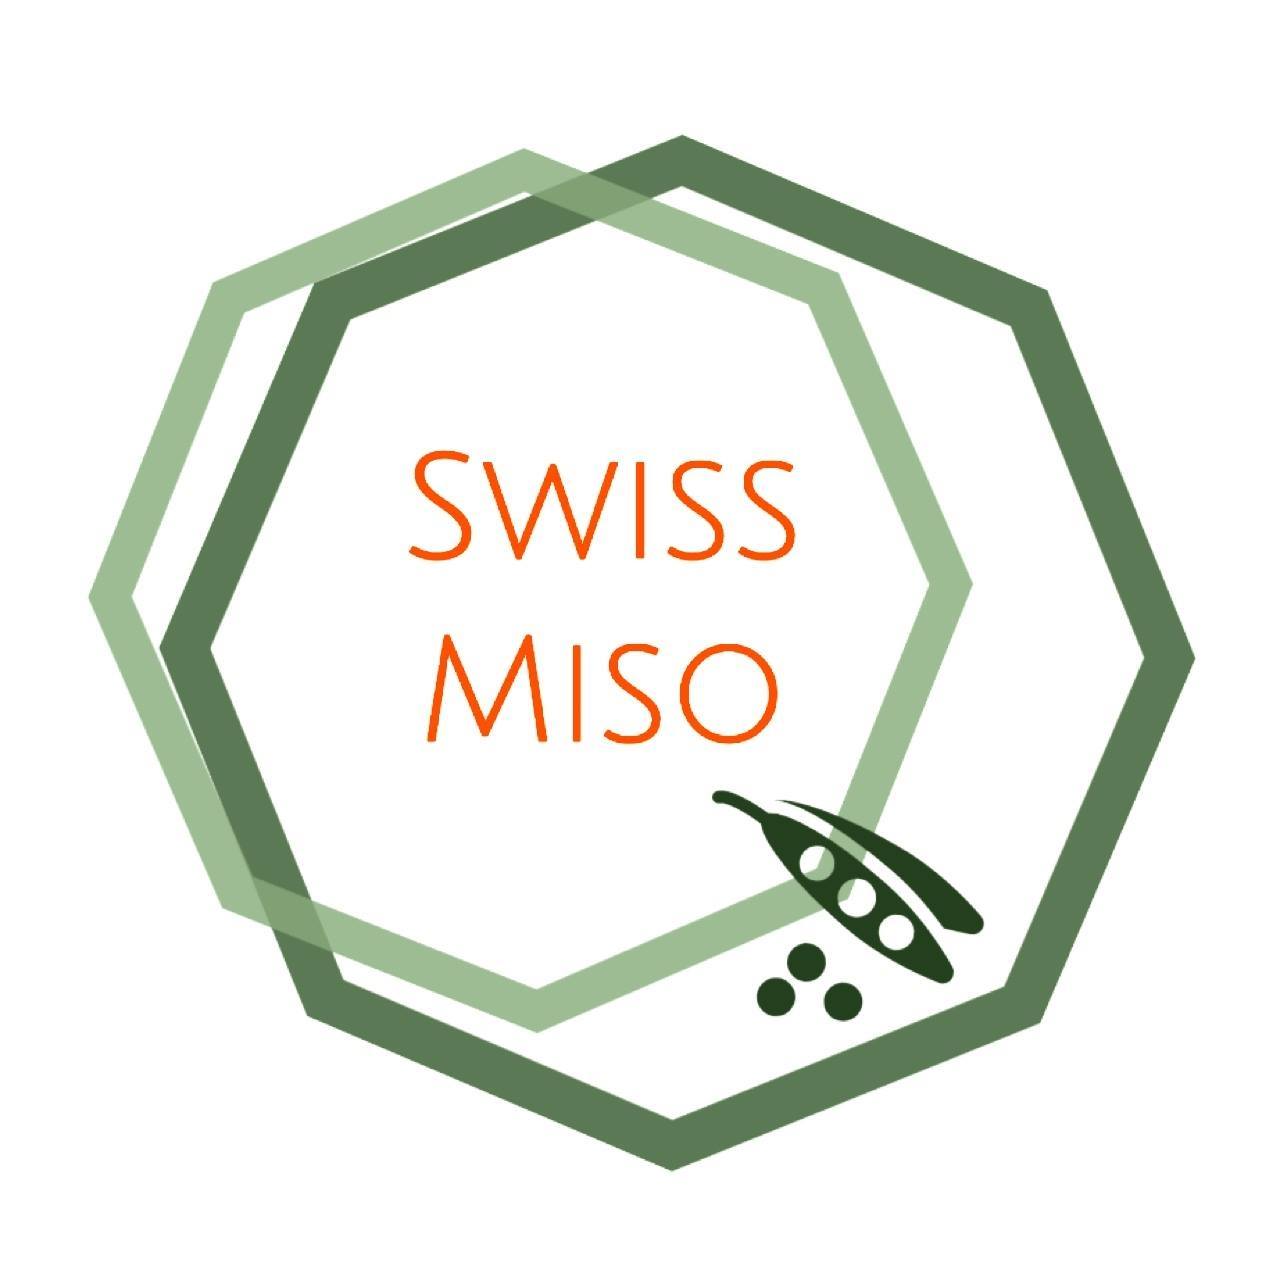 Swiss Miso